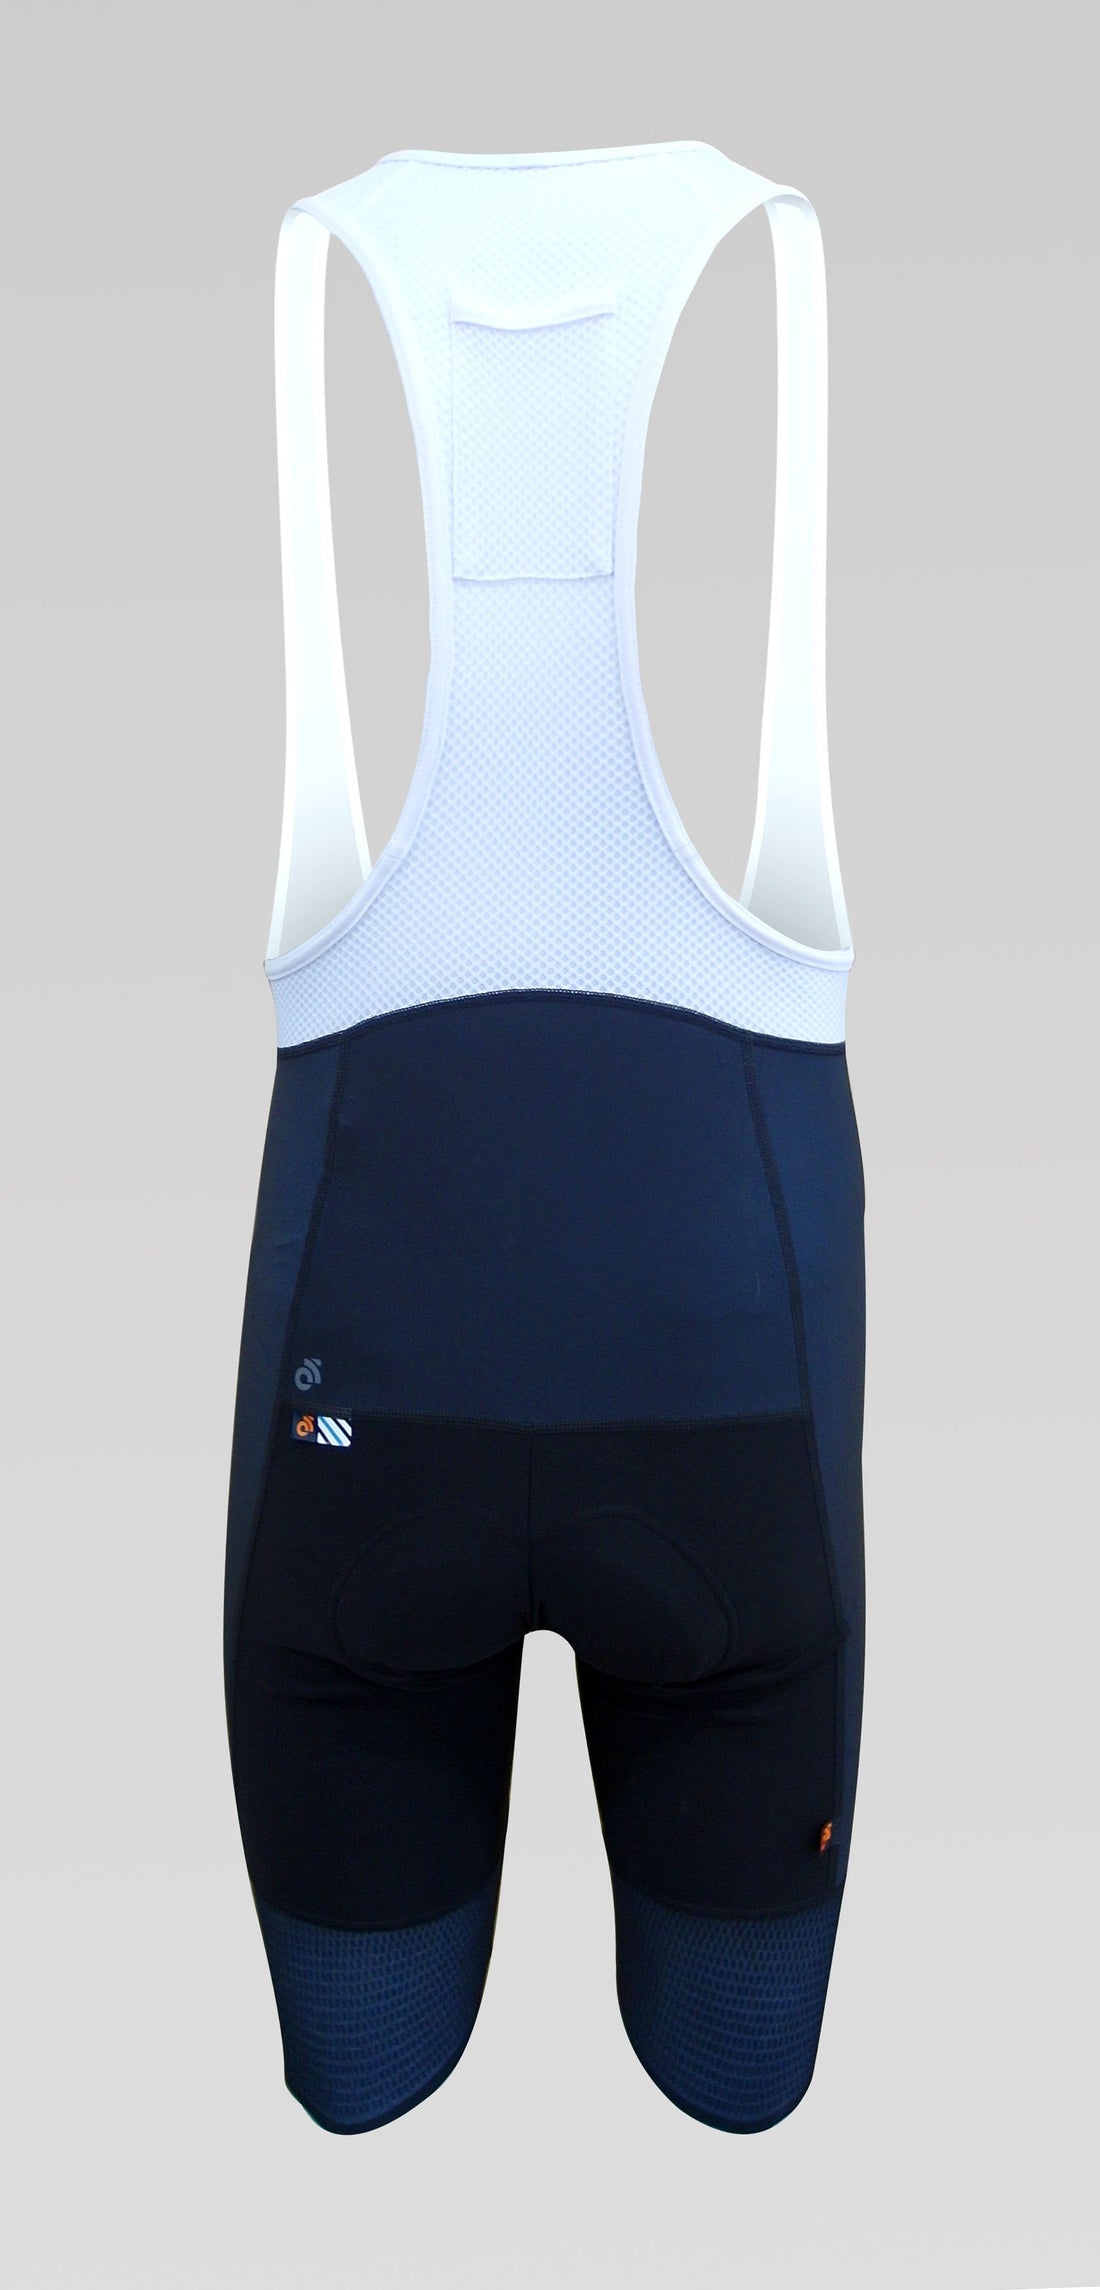 Performance Bib Short-Bib Shorts-custom-design-athletic-sports-champ-sys-uk-champion-system